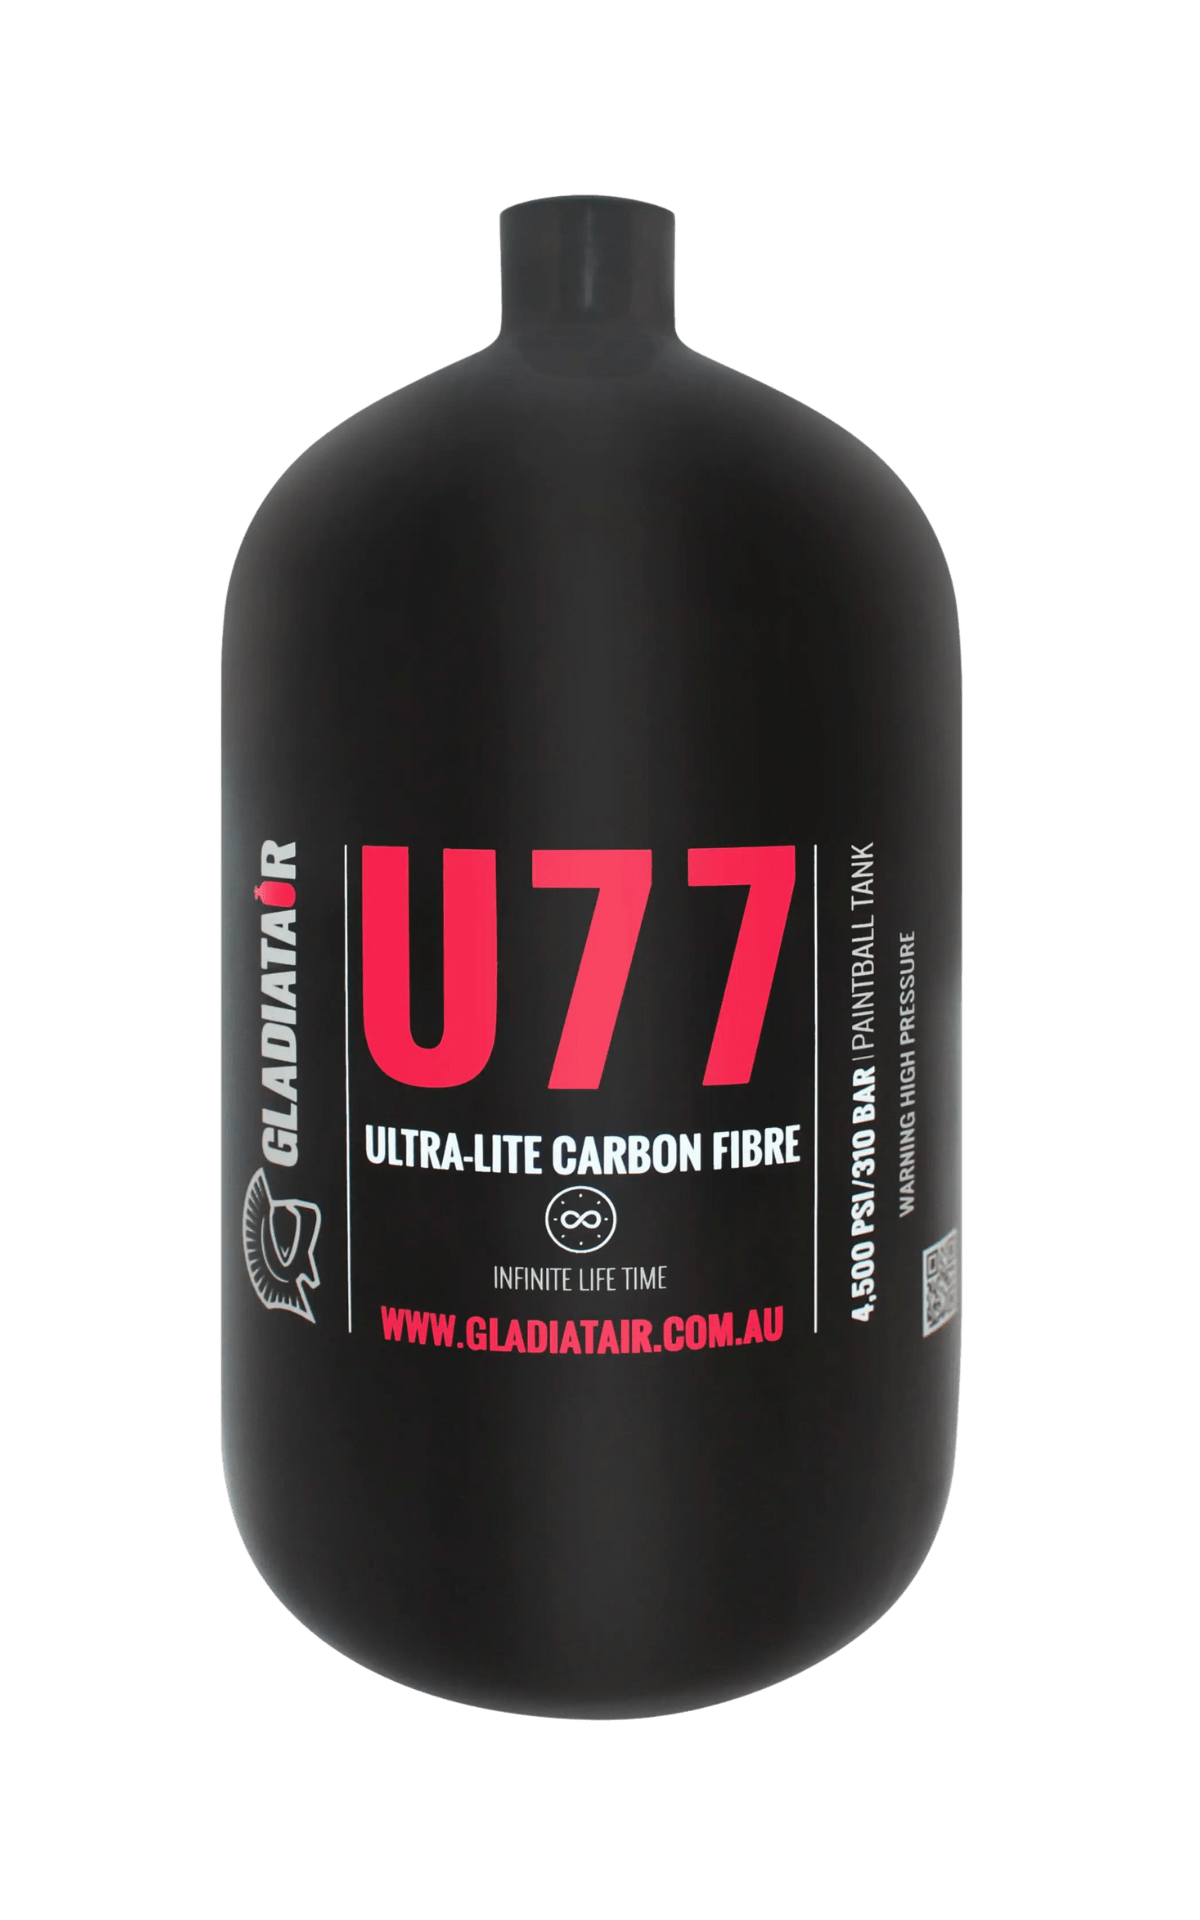 U77 New Transparent